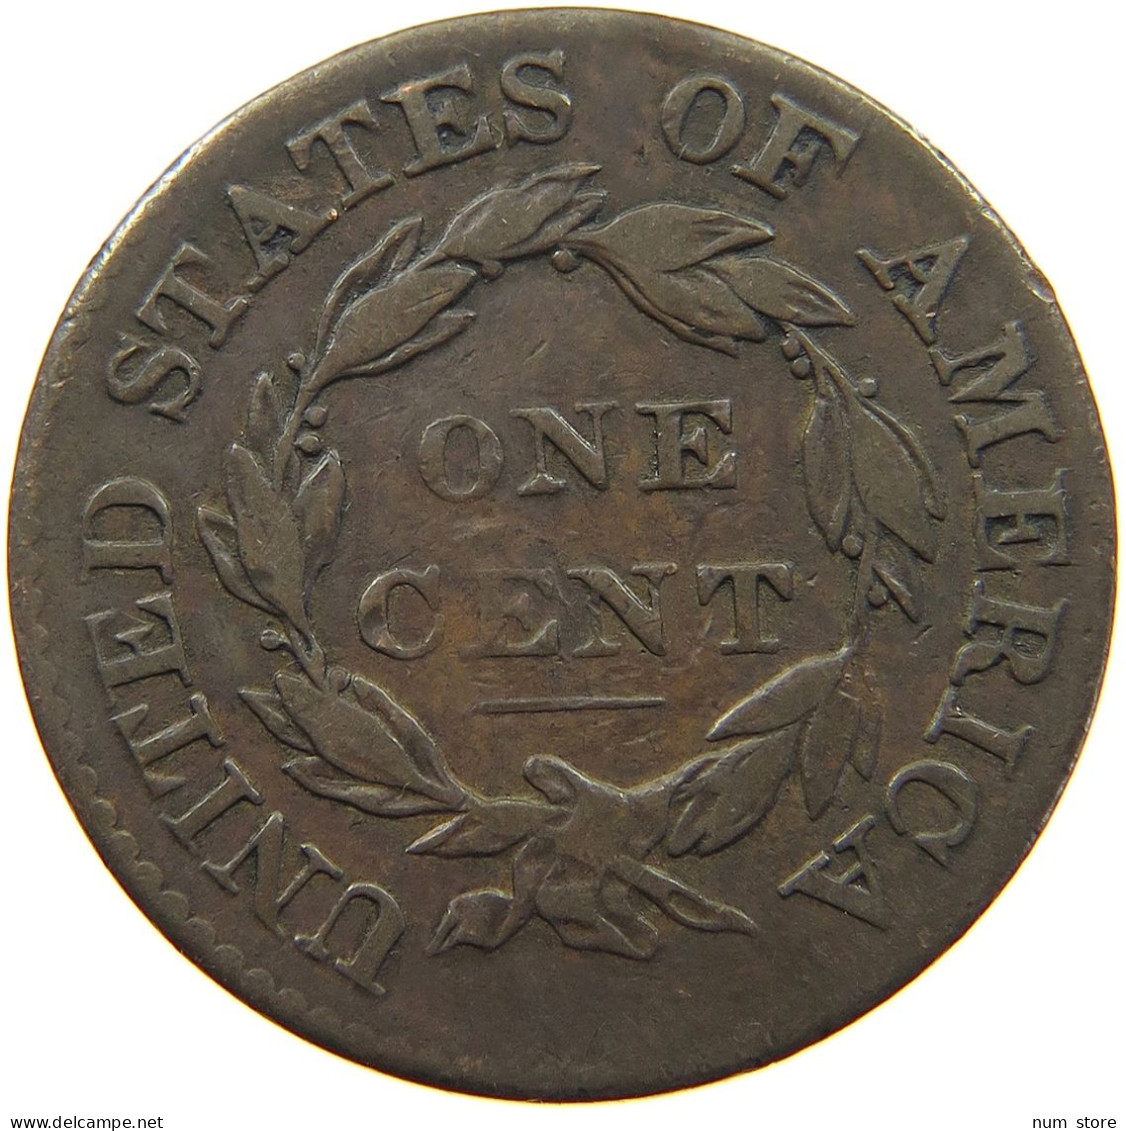 UNITED STATES OF AMERICA LARGE CENT 1825 CORONET HEAD #t077 0461 - 1816-1839: Coronet Head